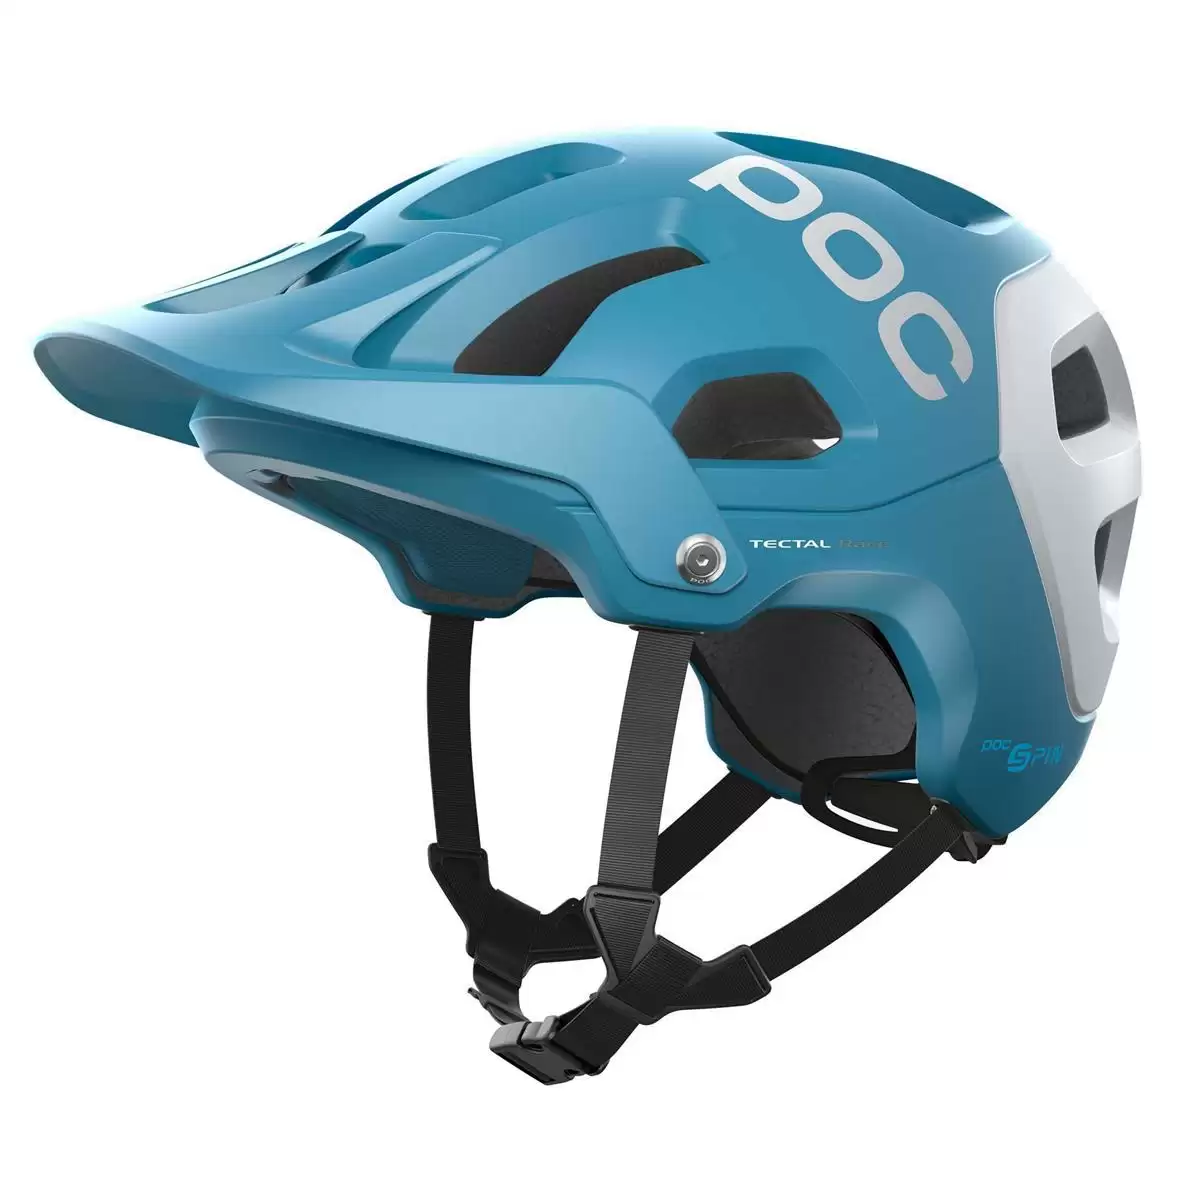 Enduro Helmet Tectal Race Spin Light Blue Size XS-S (51-54cm) - image